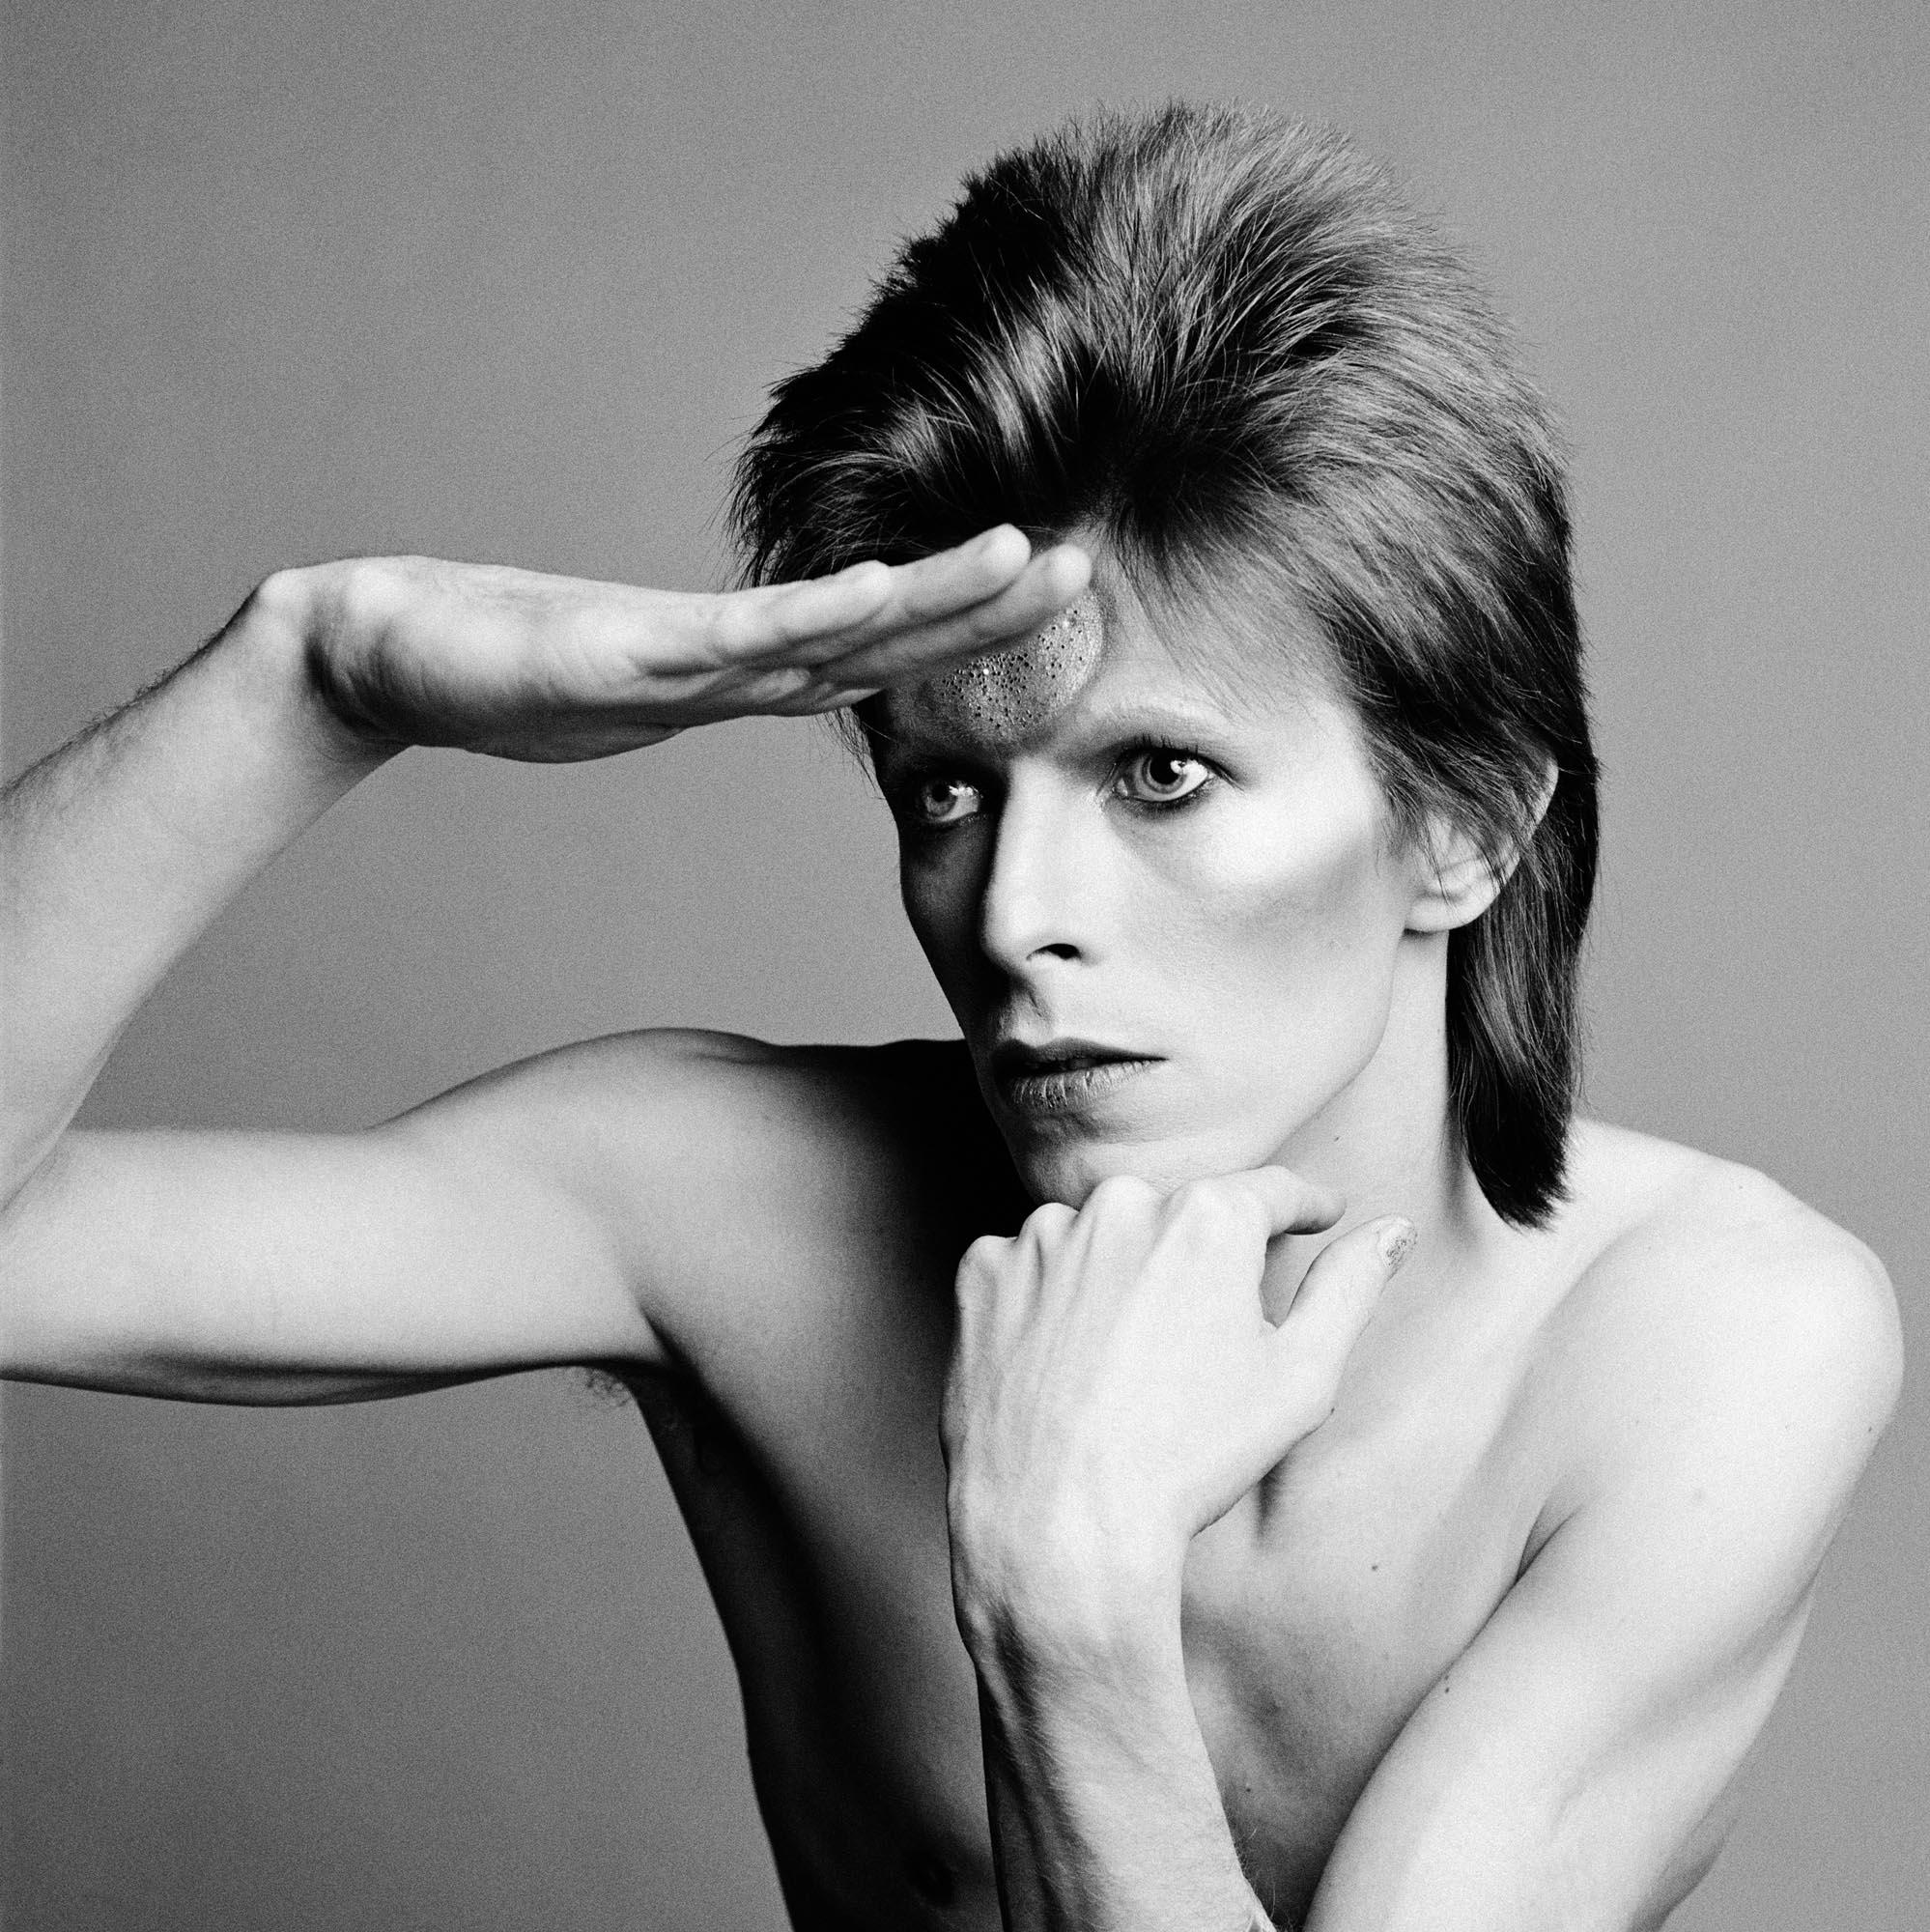 Masayoshi Sukita Portrait Photograph - David Bowie "As I Ask You To Focus On" 1973 by Sukita